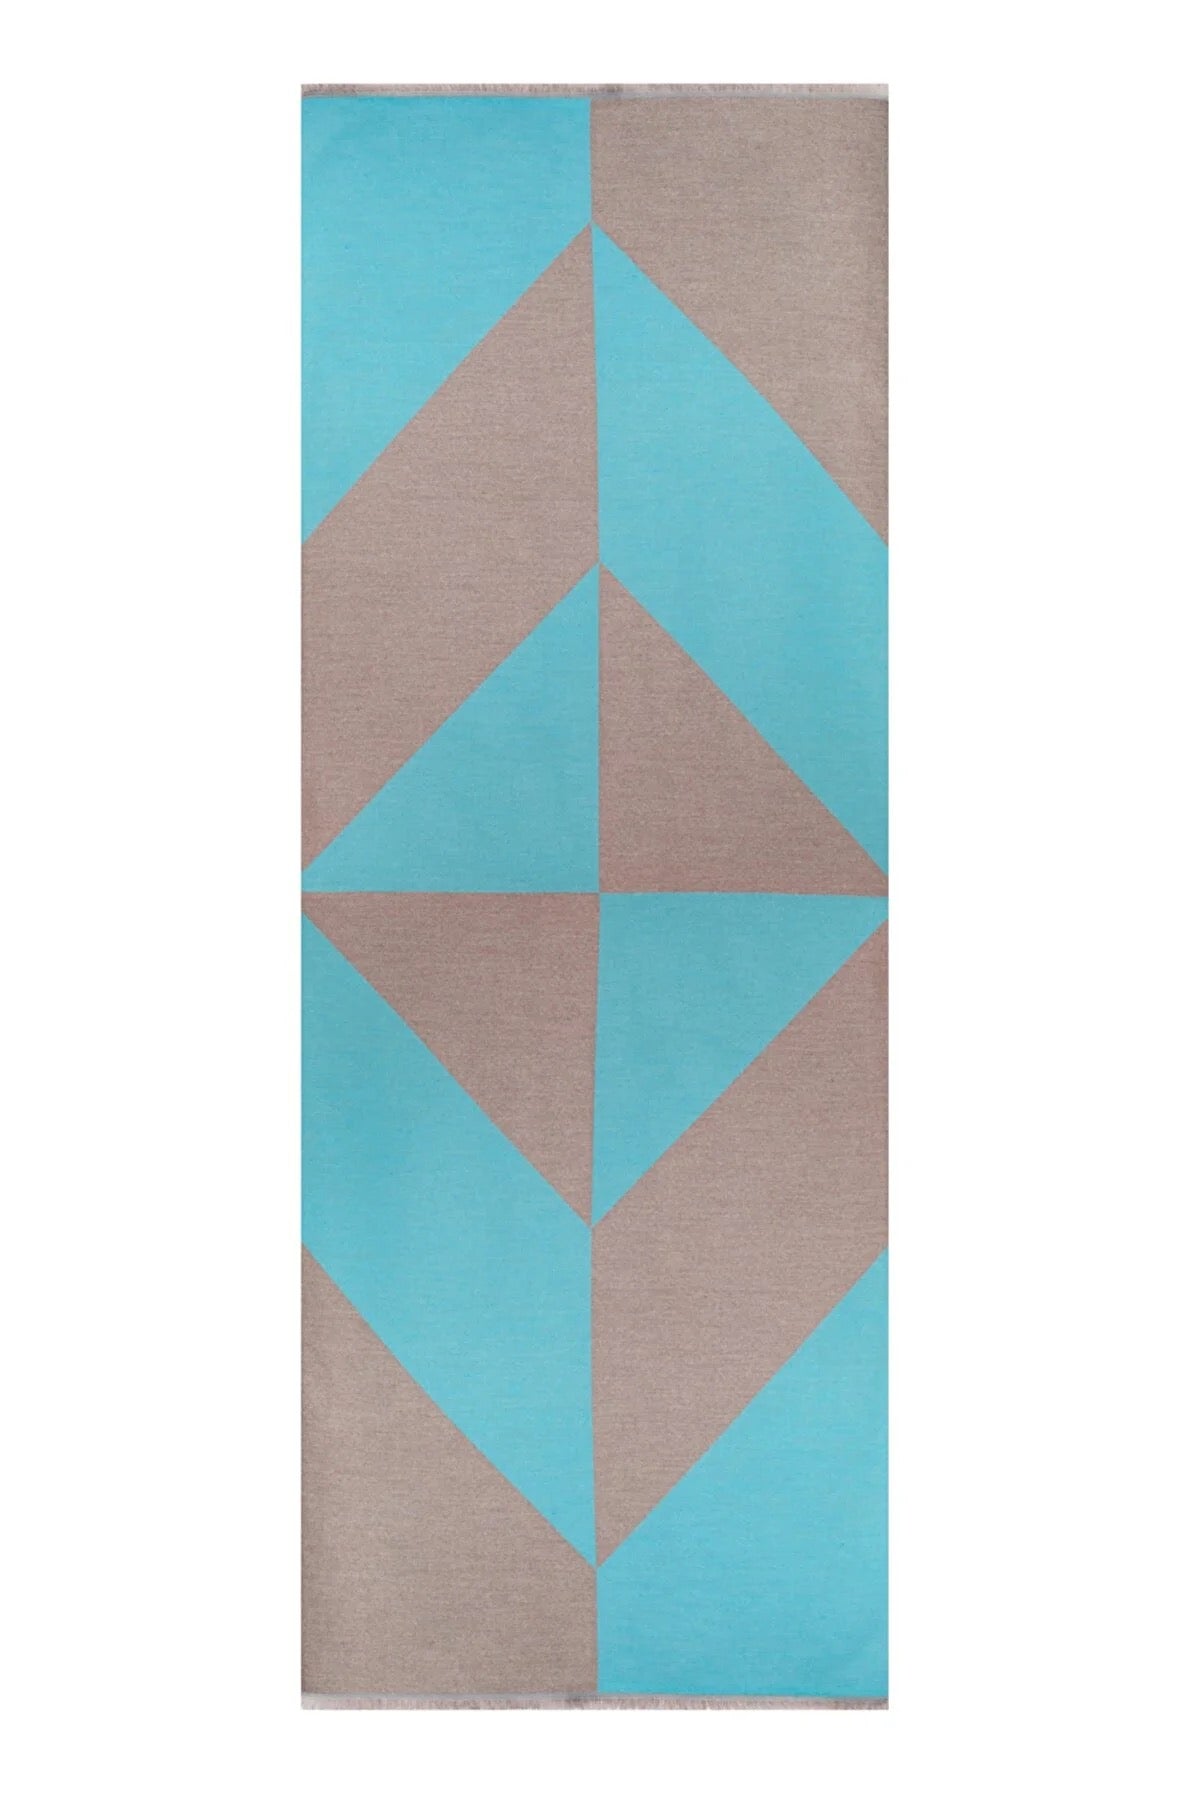 Symmetric Mo-shmeres Triangles Dual Tone - Turquoise Taupe